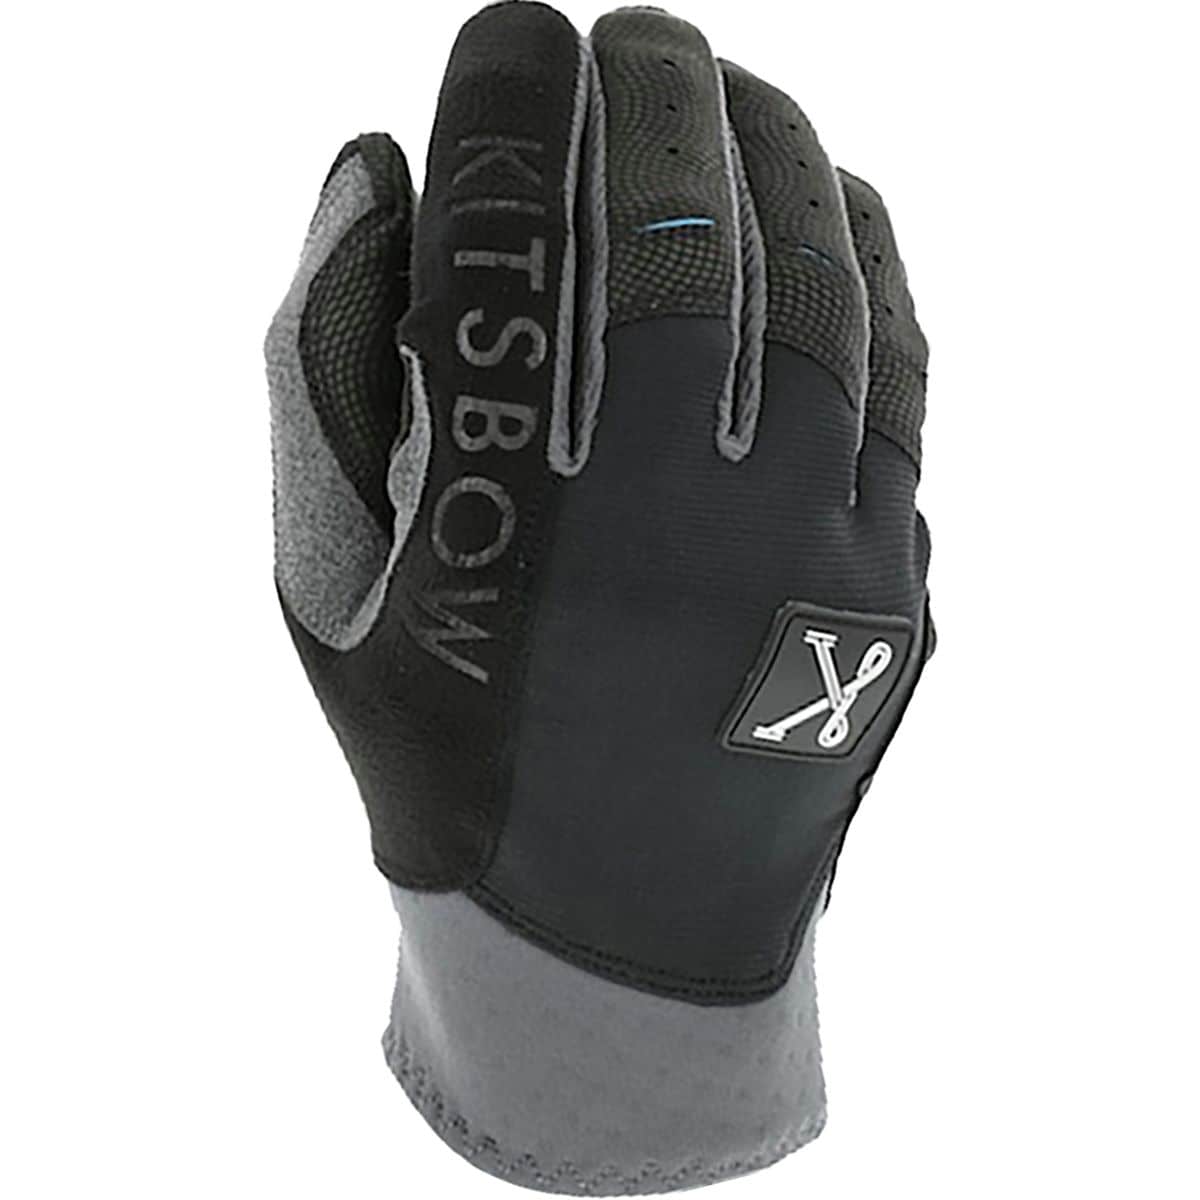 Kitsbow Kitchel Lightweight Glove - Men's